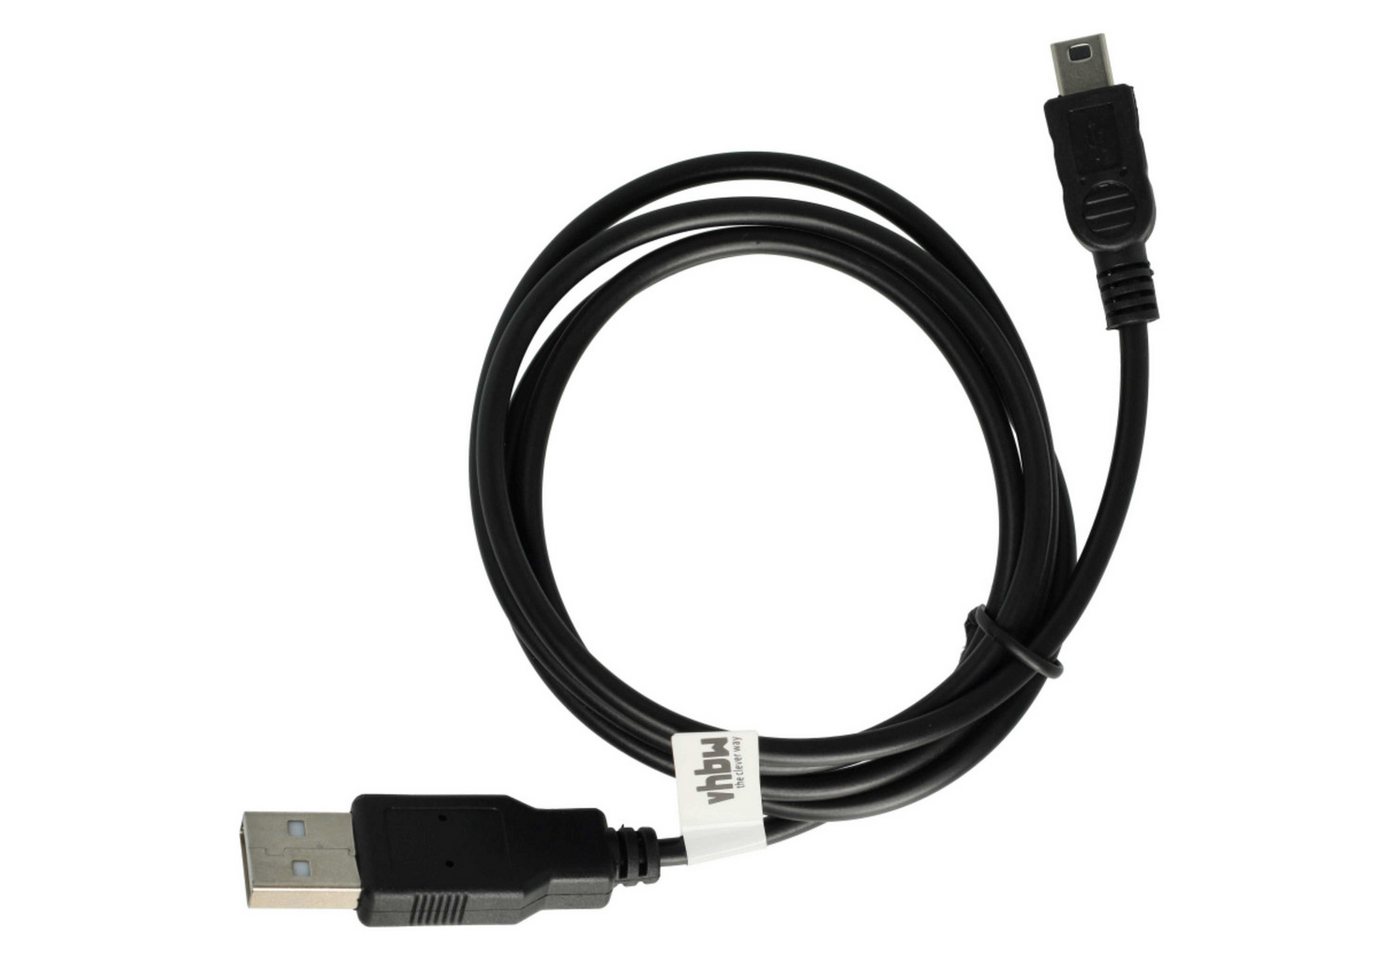 vhbw passend für Sony MiniDV DCR-HC65, DCR-HC46E, DCR-HC44E Kamera / USB-Kabel von vhbw